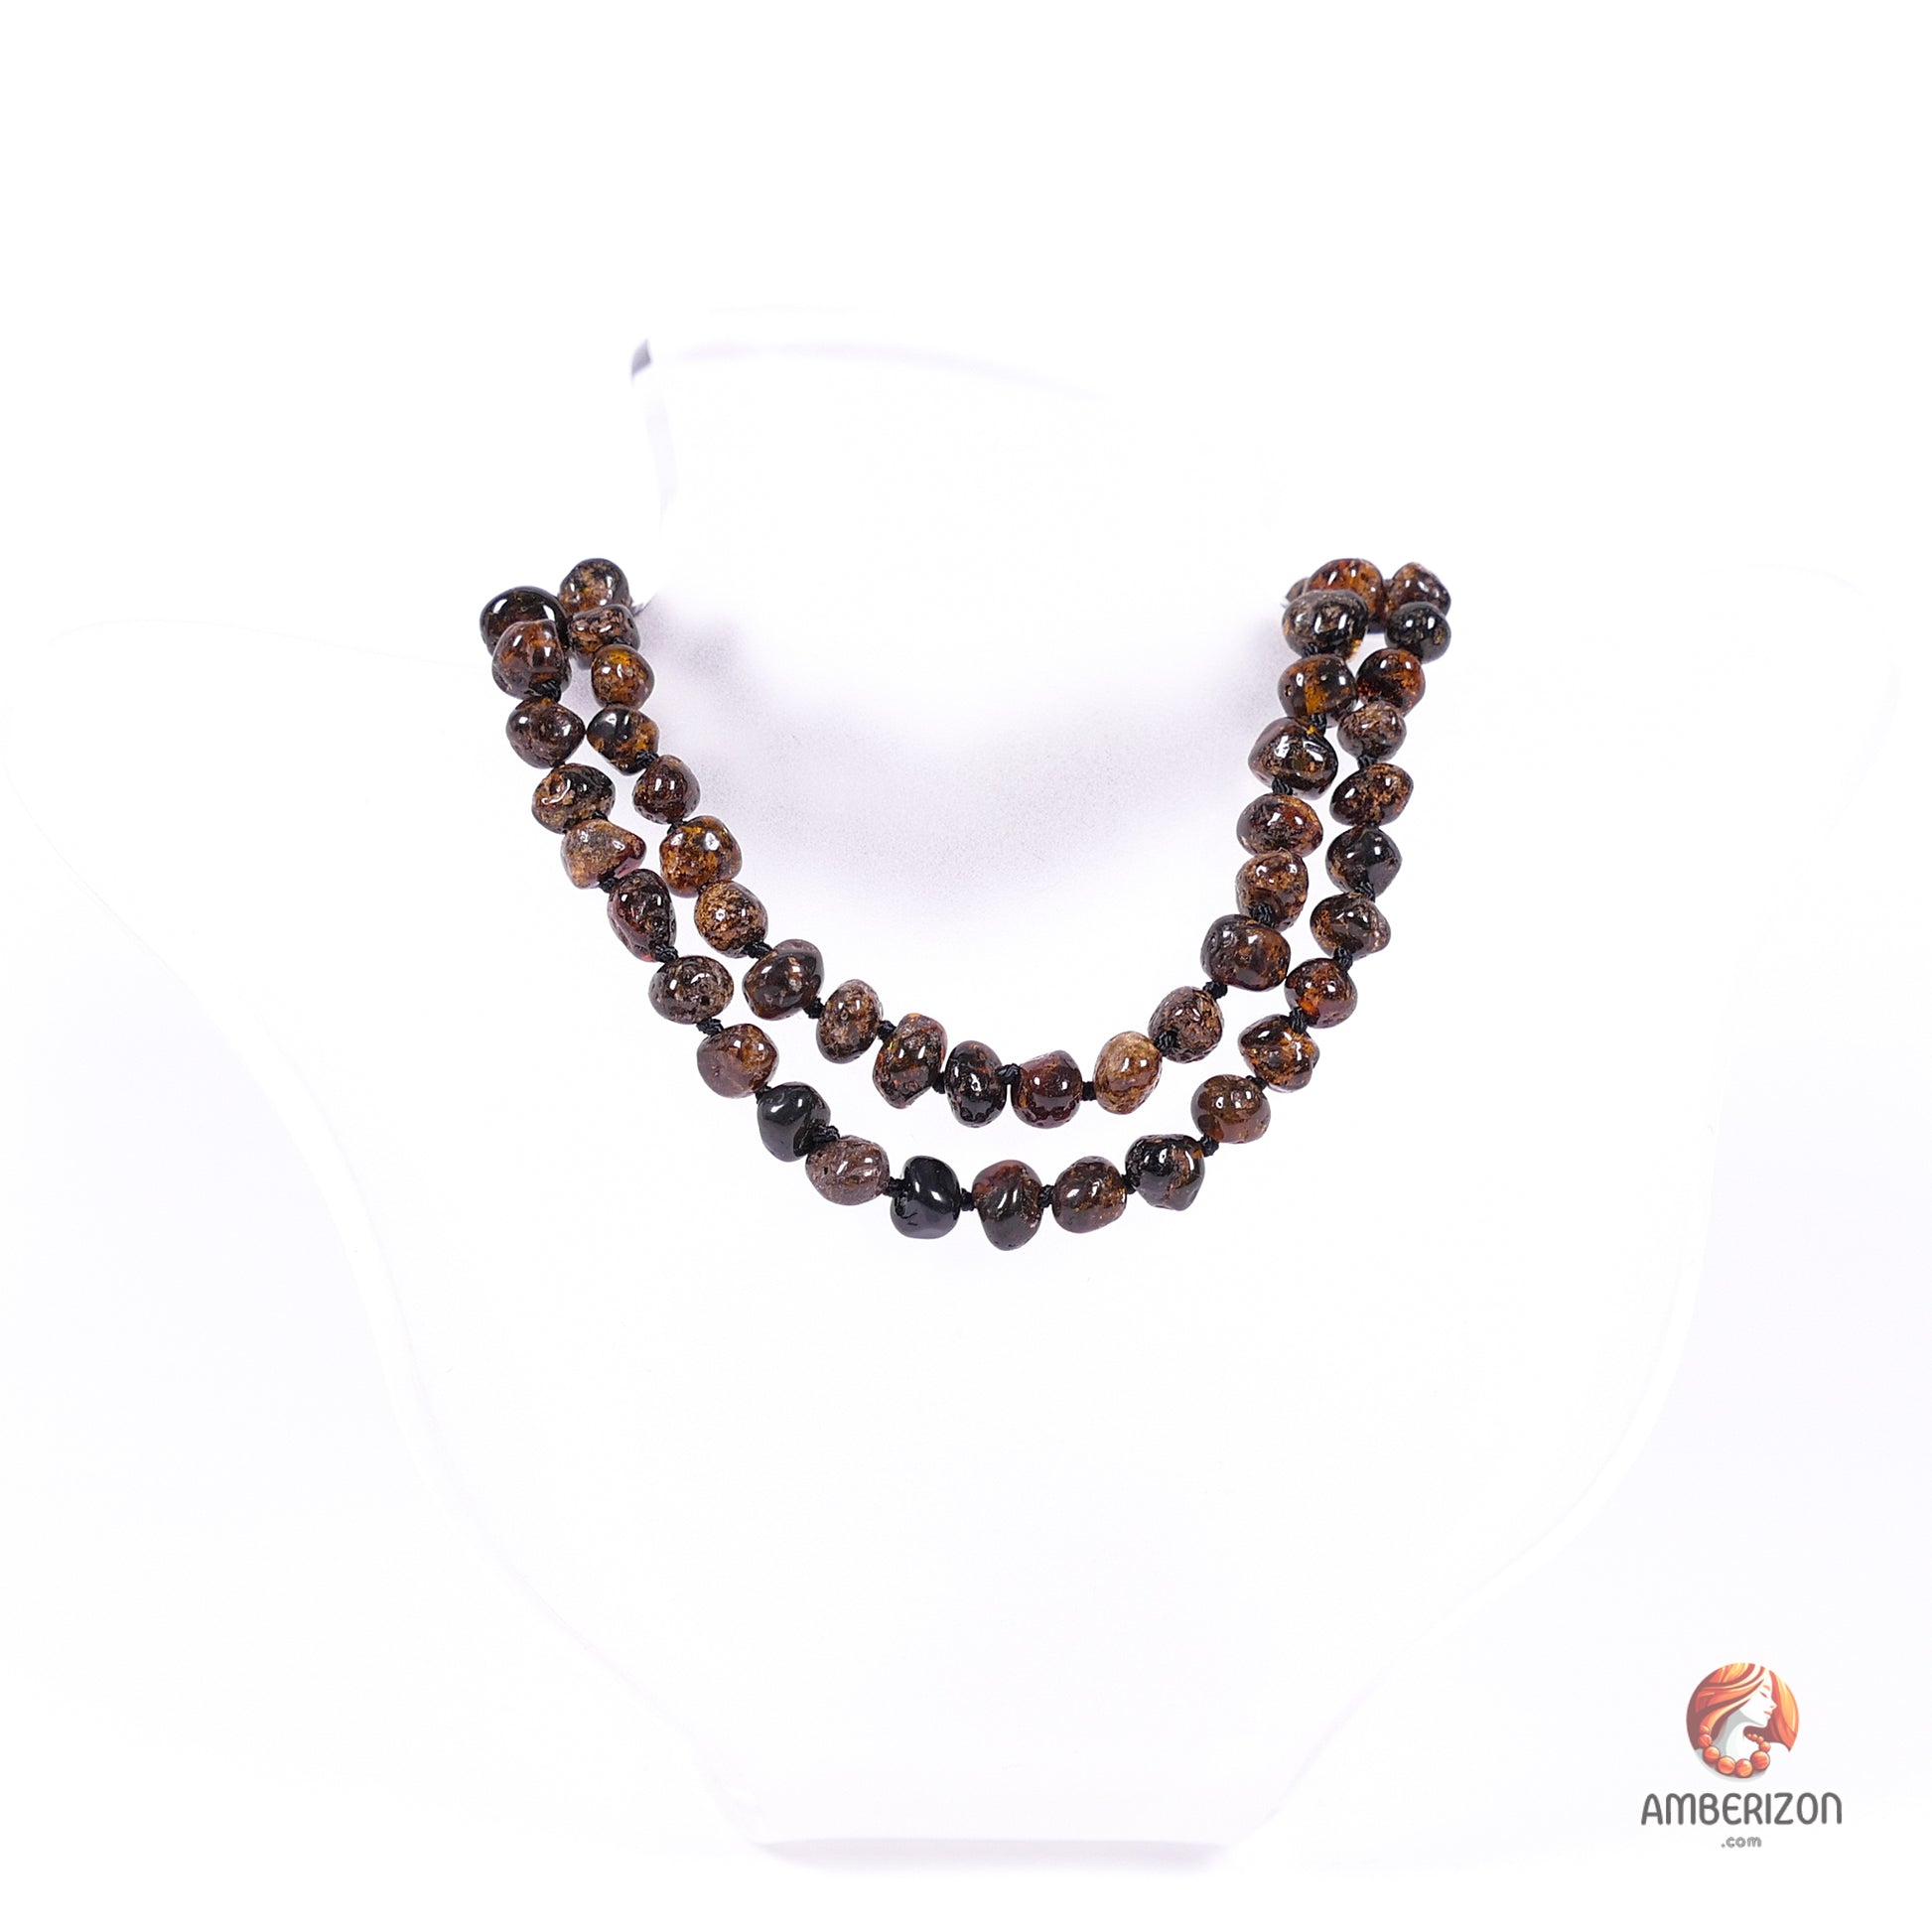 Minimalist women's necklace - Grey swamp amber beads - Rare style